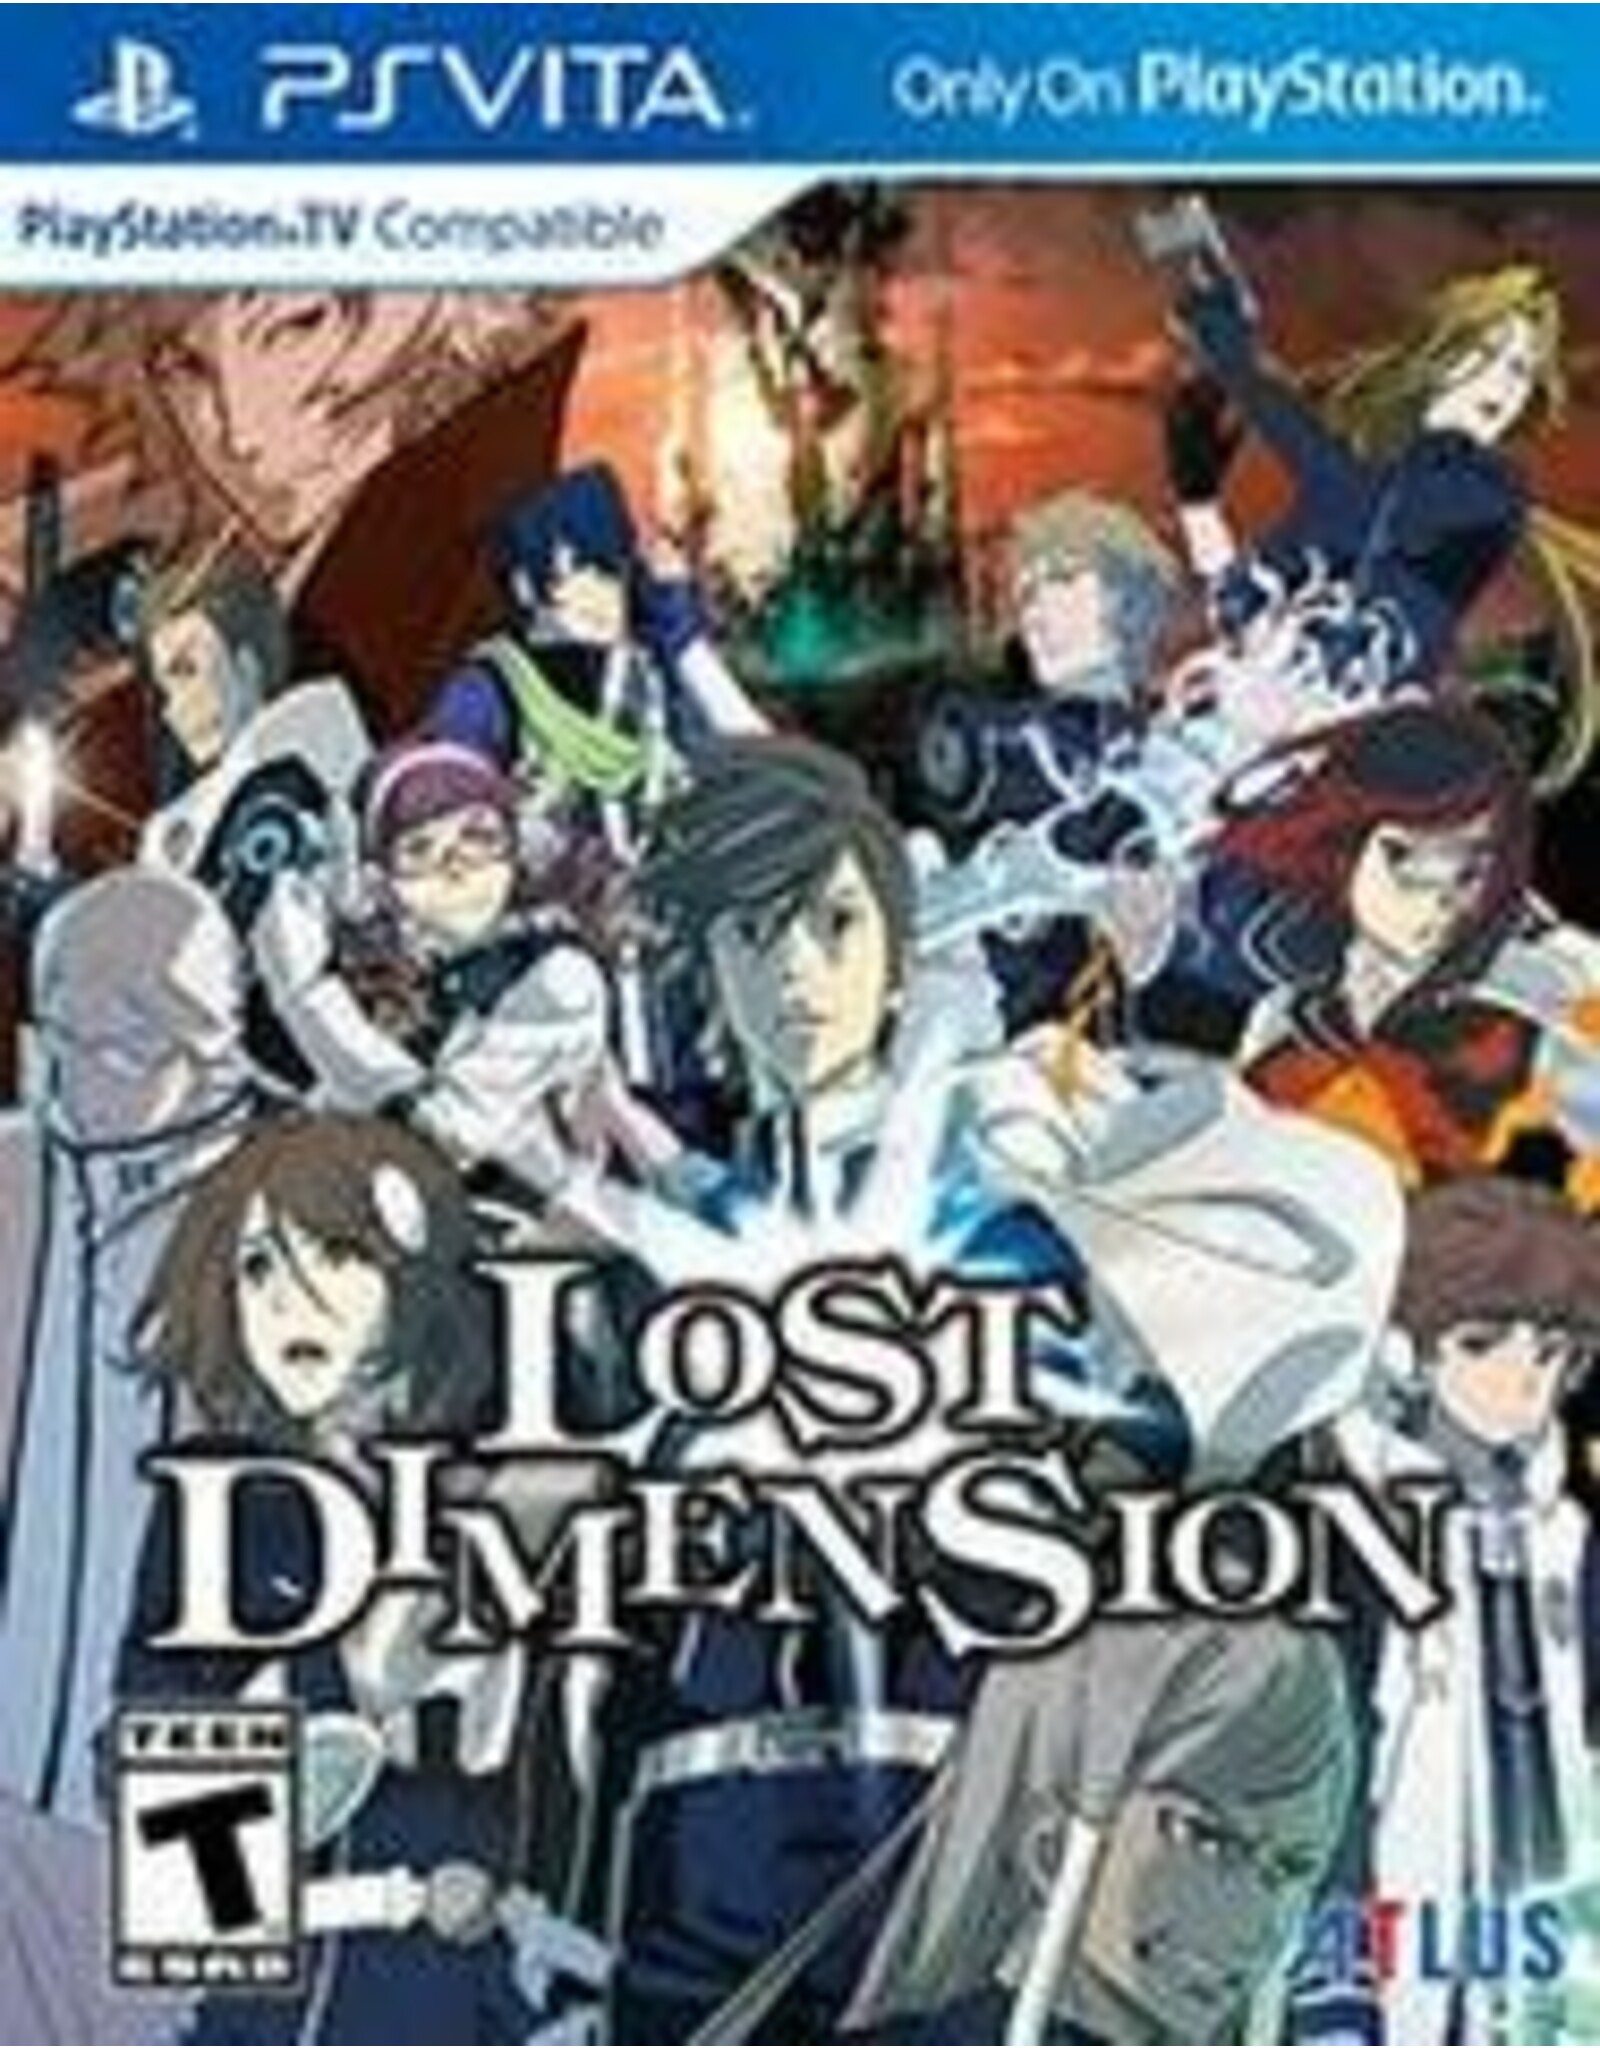 Playstation Vita Lost Dimension (CiB)